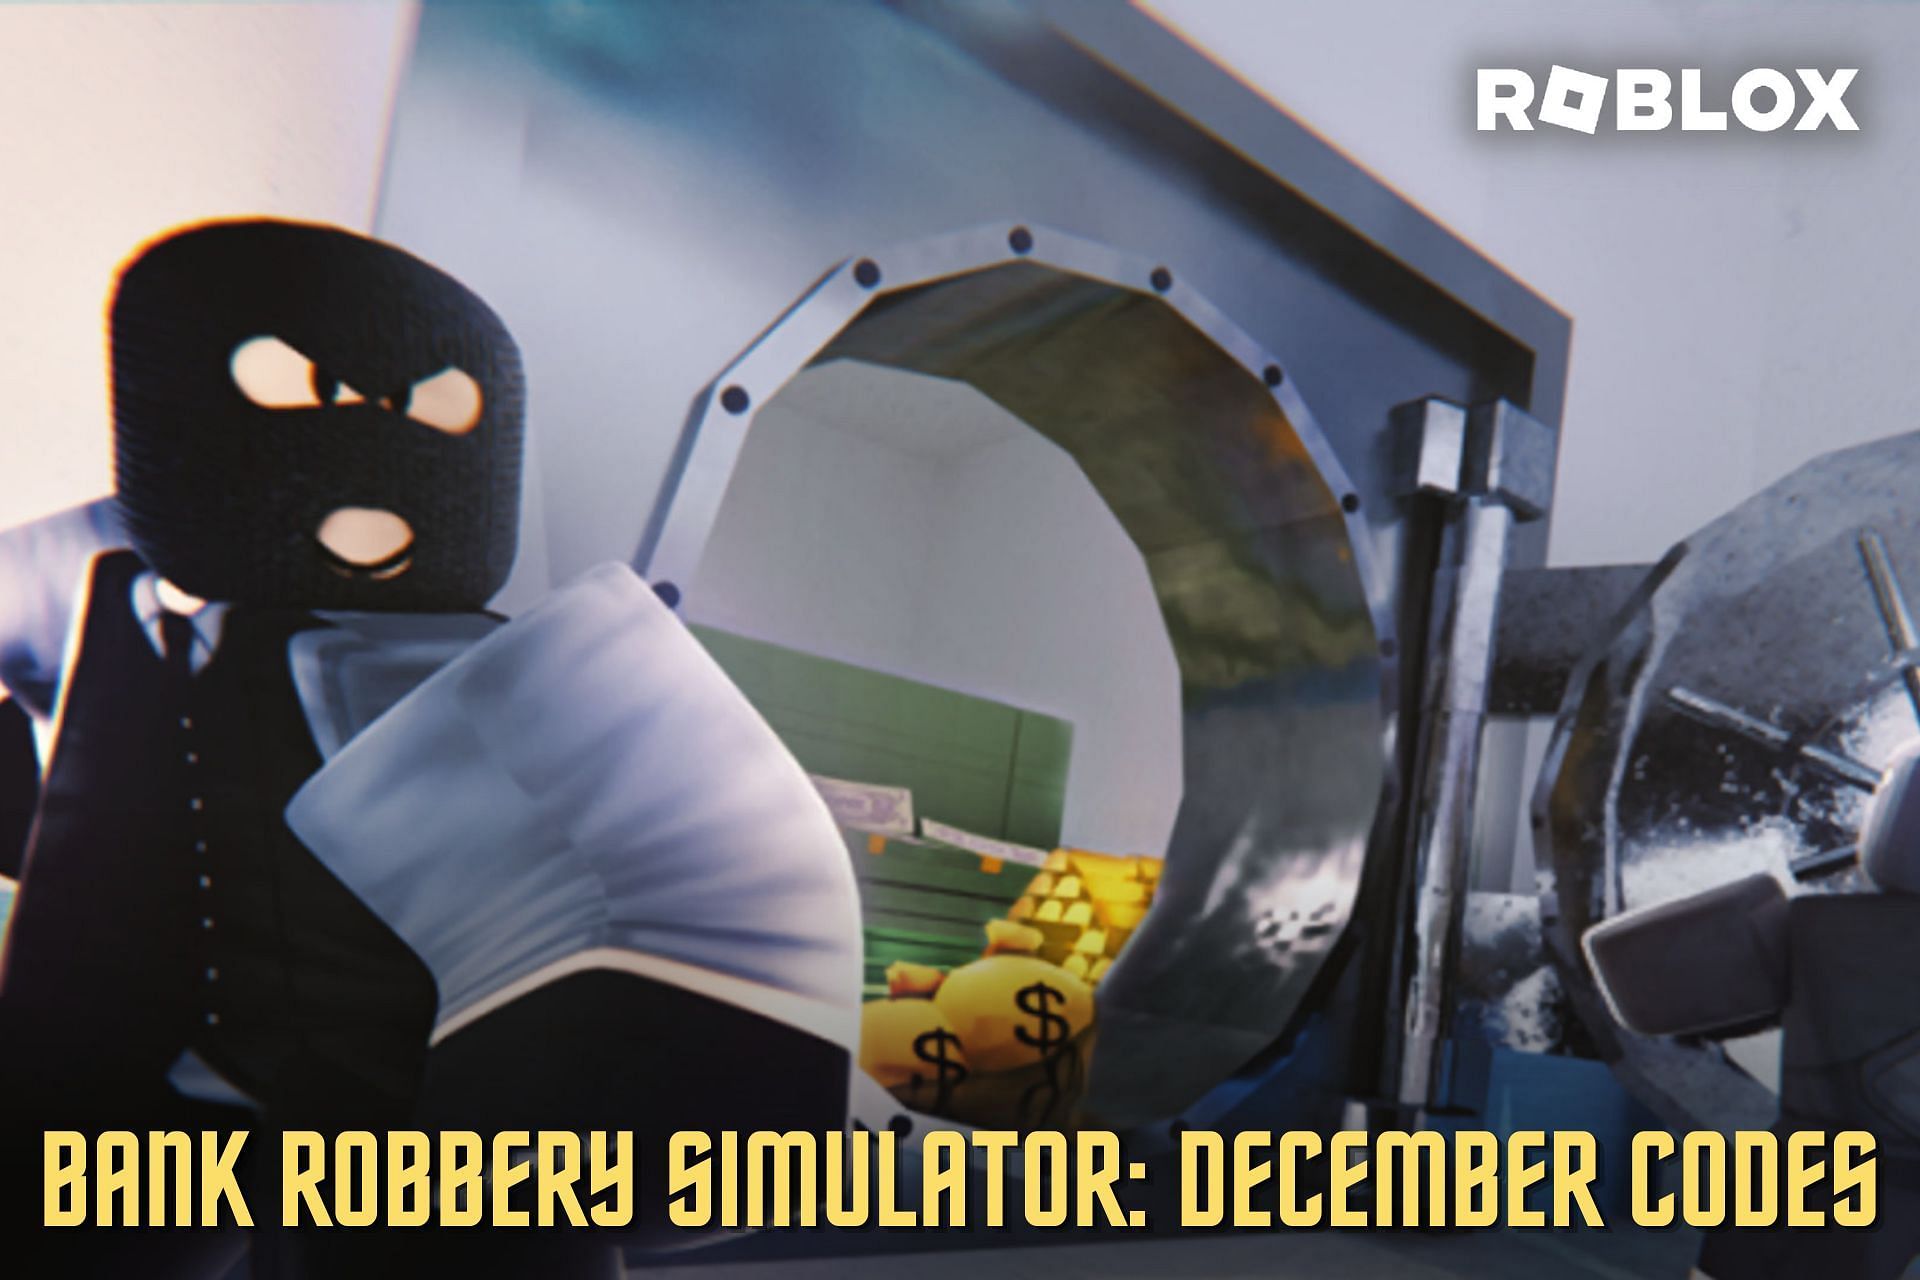 Roblox Robbery Simulator Codes